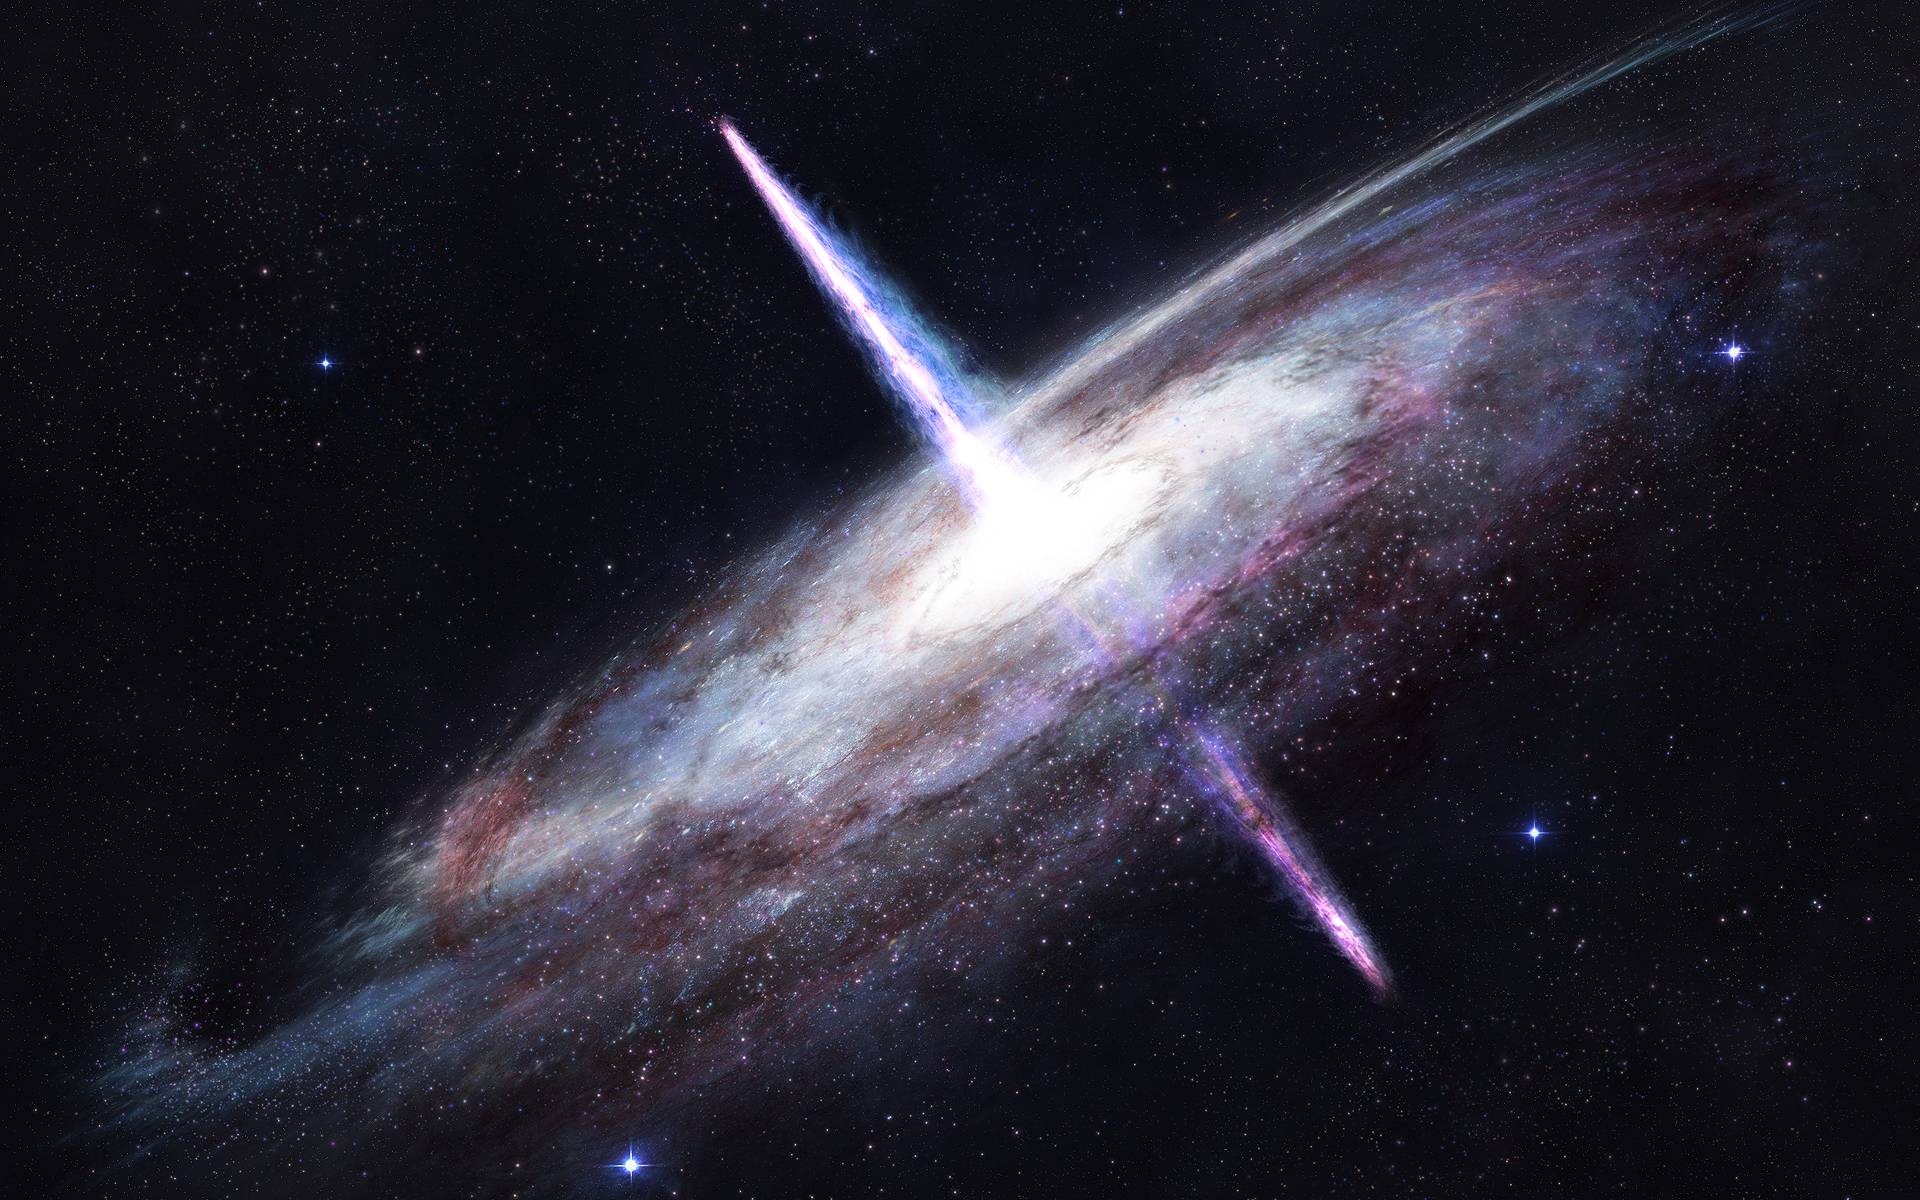 quasar_by_tadp0l3-d3i5axl.jpg